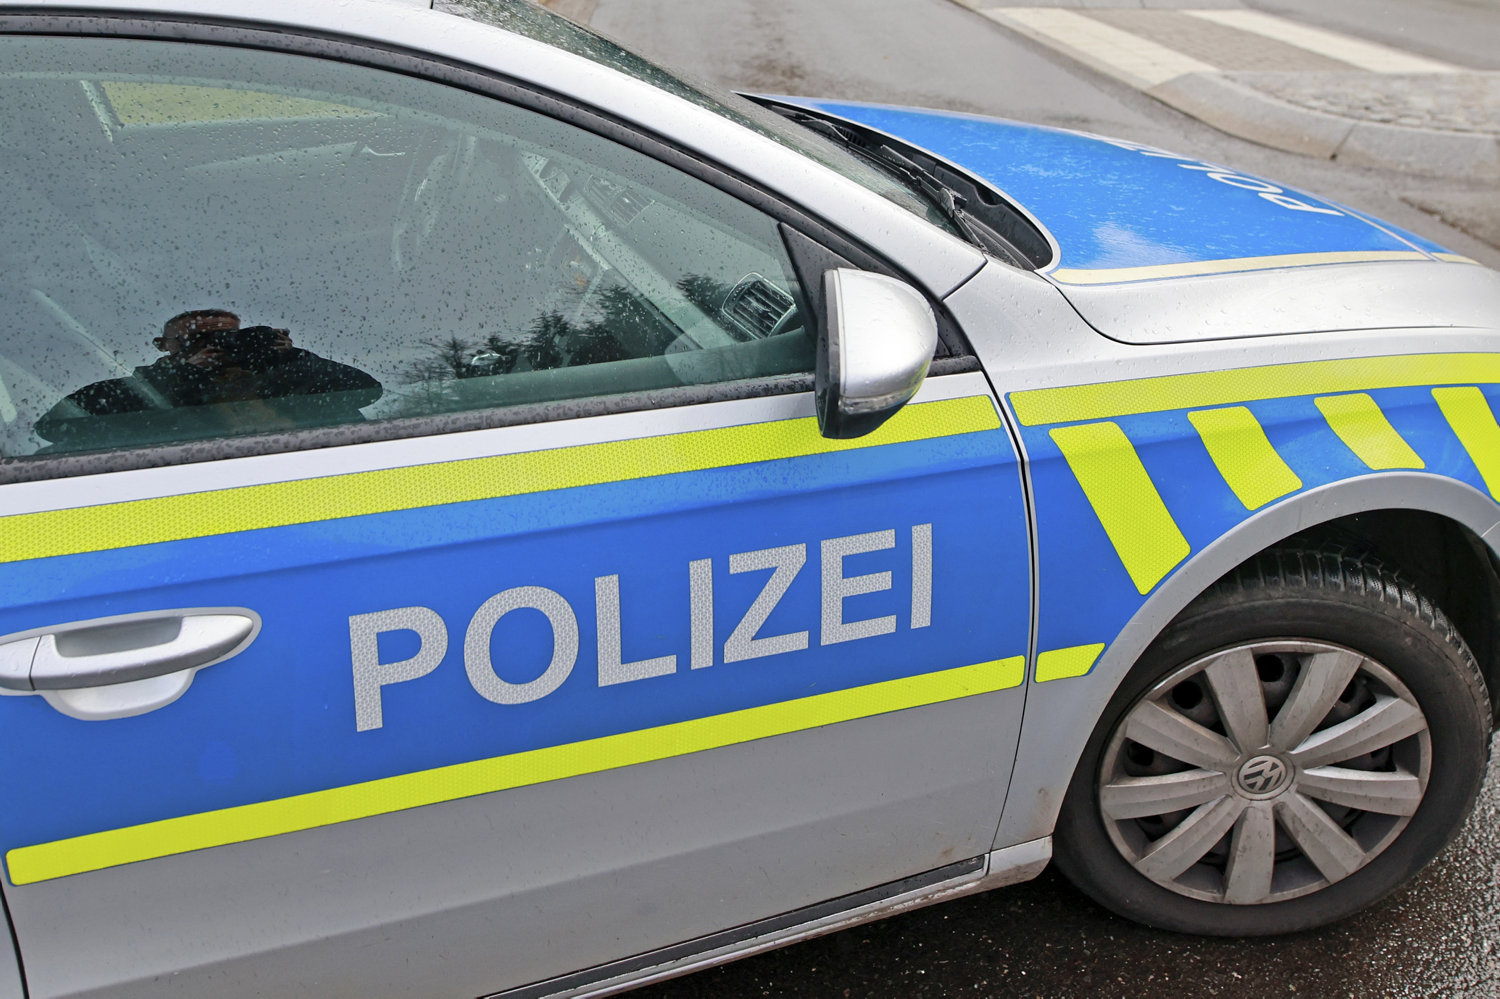 fire teenagere anholdt: planlagde islamistiske angreb i tyskland